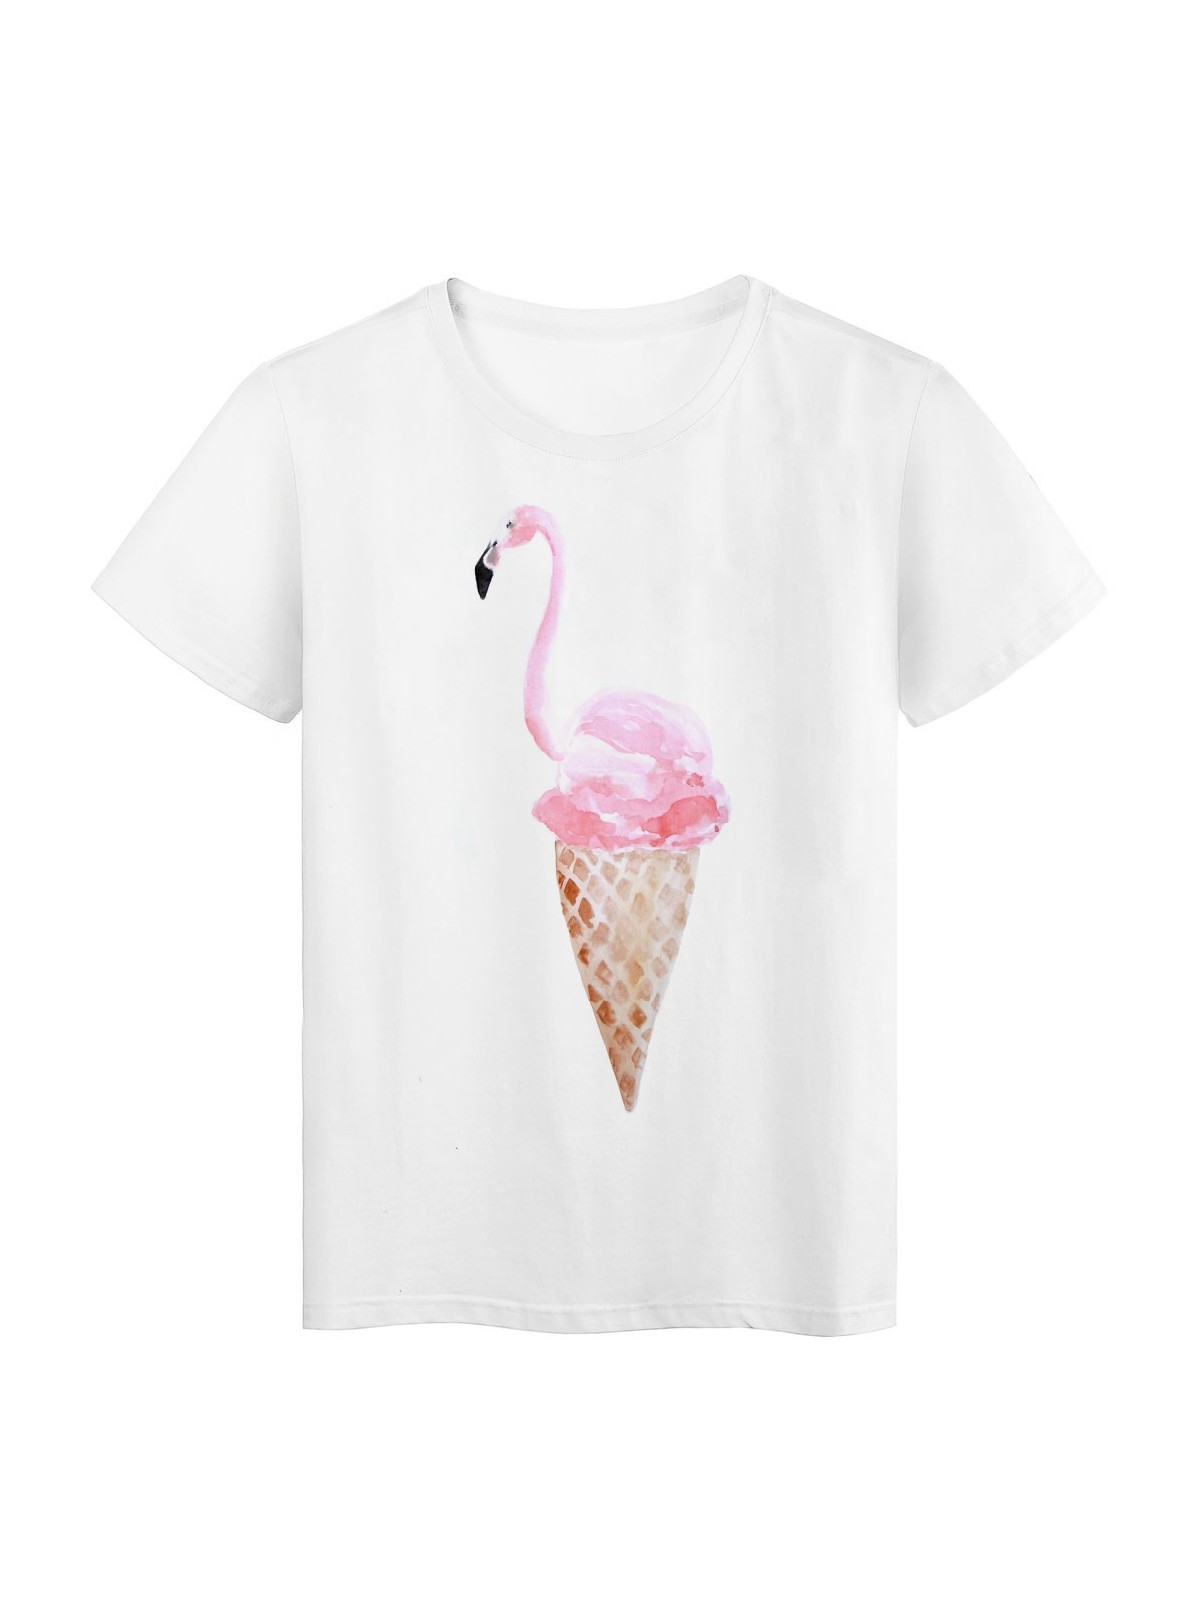 T-Shirt blanc Design flamant rose cornet de glace rÃ©f Tee shirt 2166